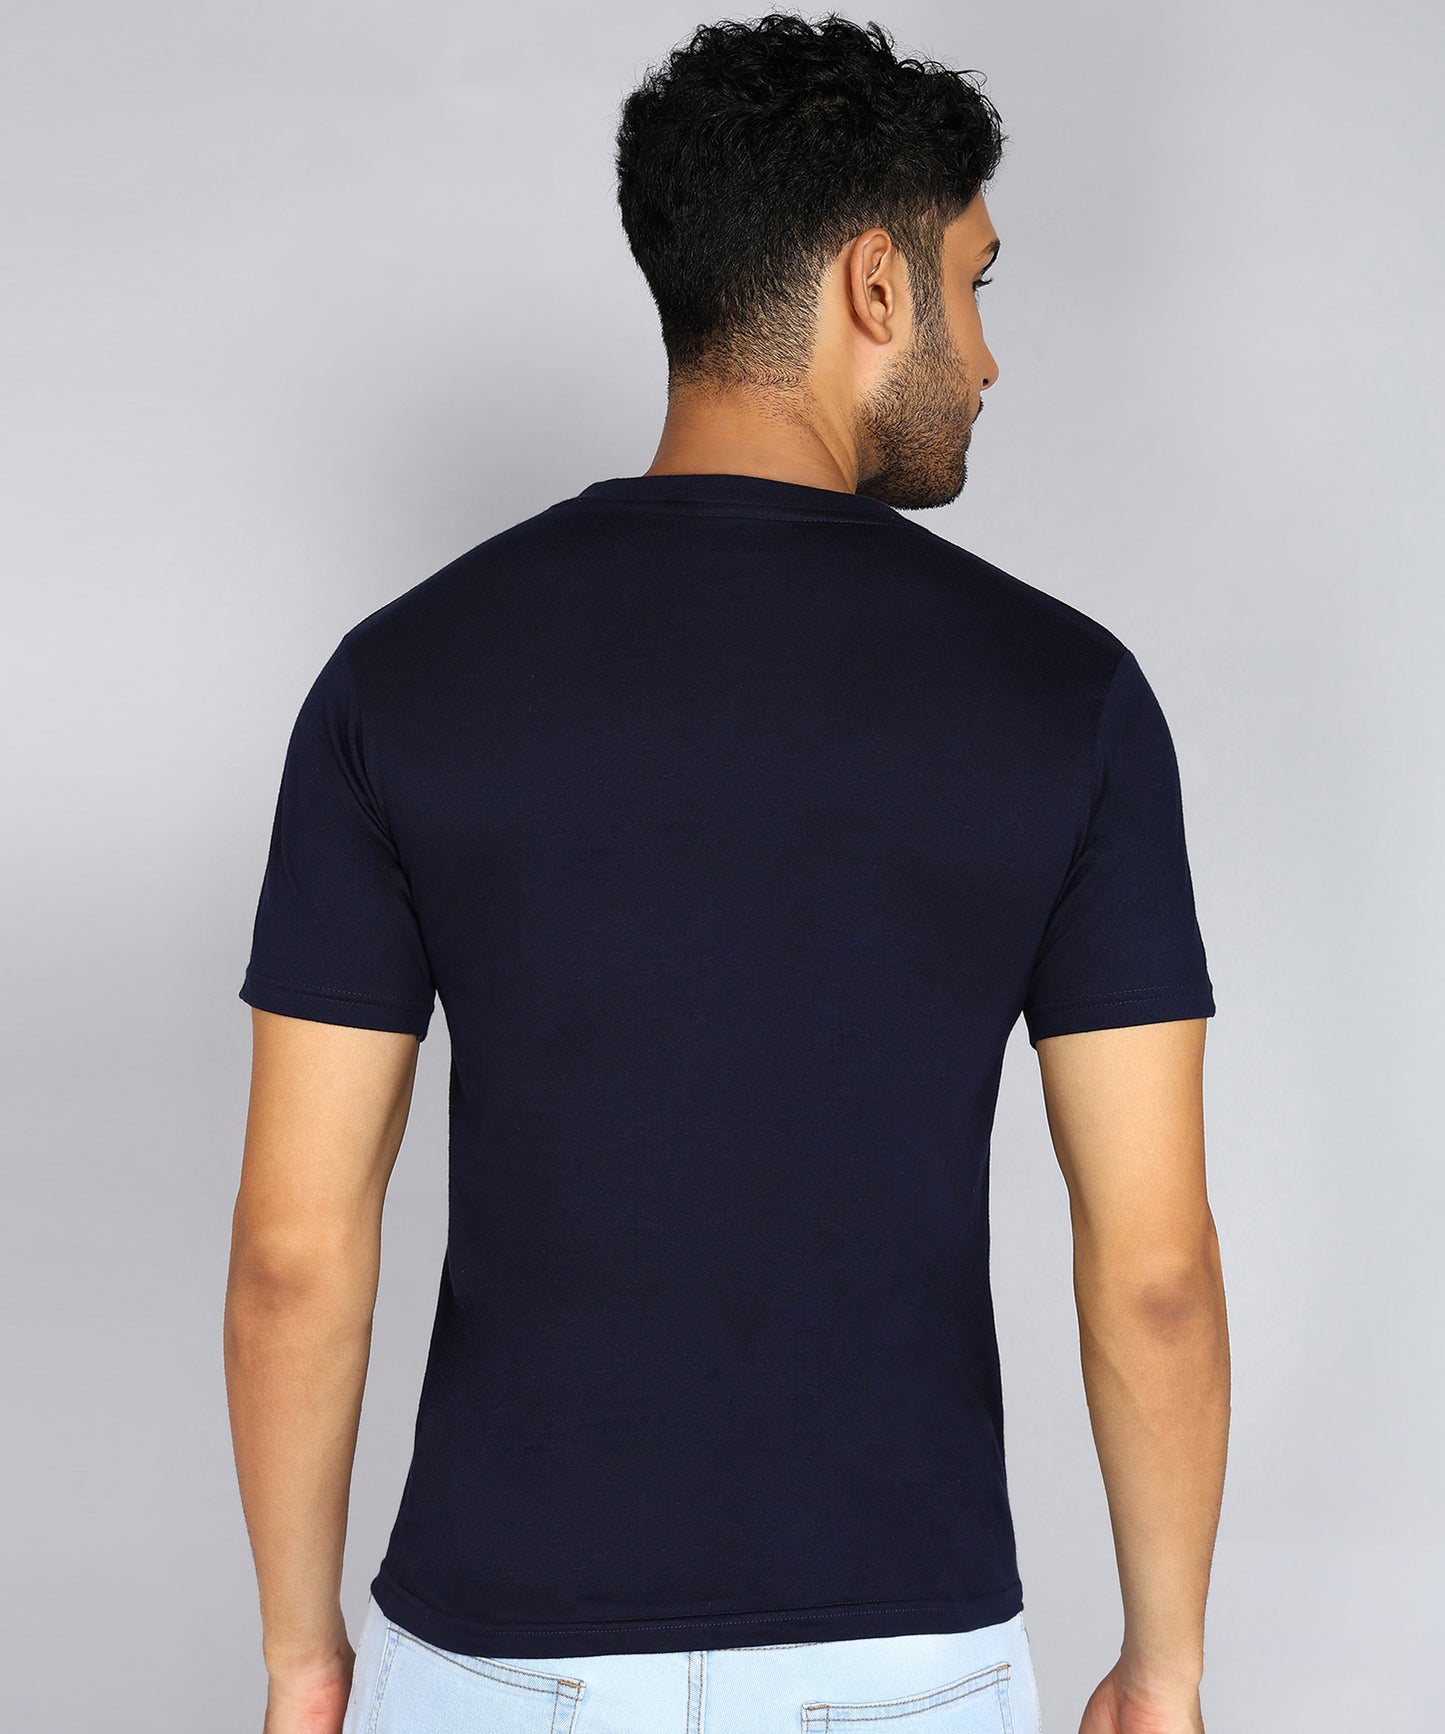 Men's Cotton Plain V Neck Half Sleeve T-Shirt ( Pack of 2)